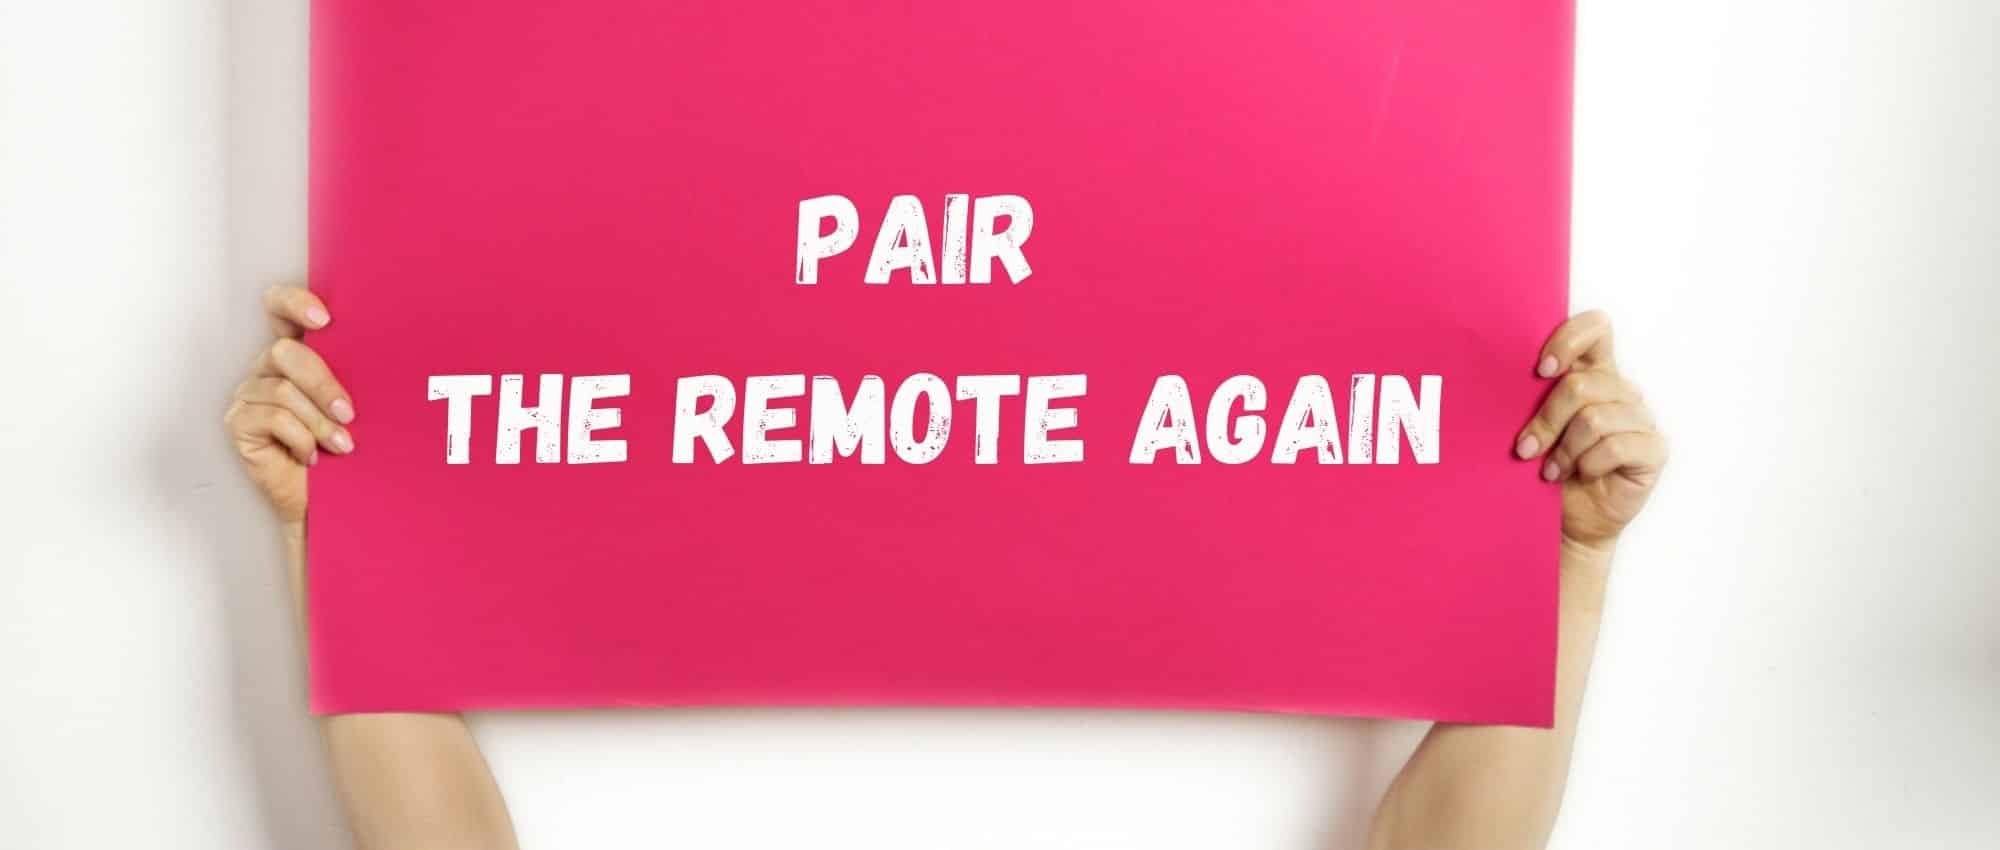 Pair the remote again